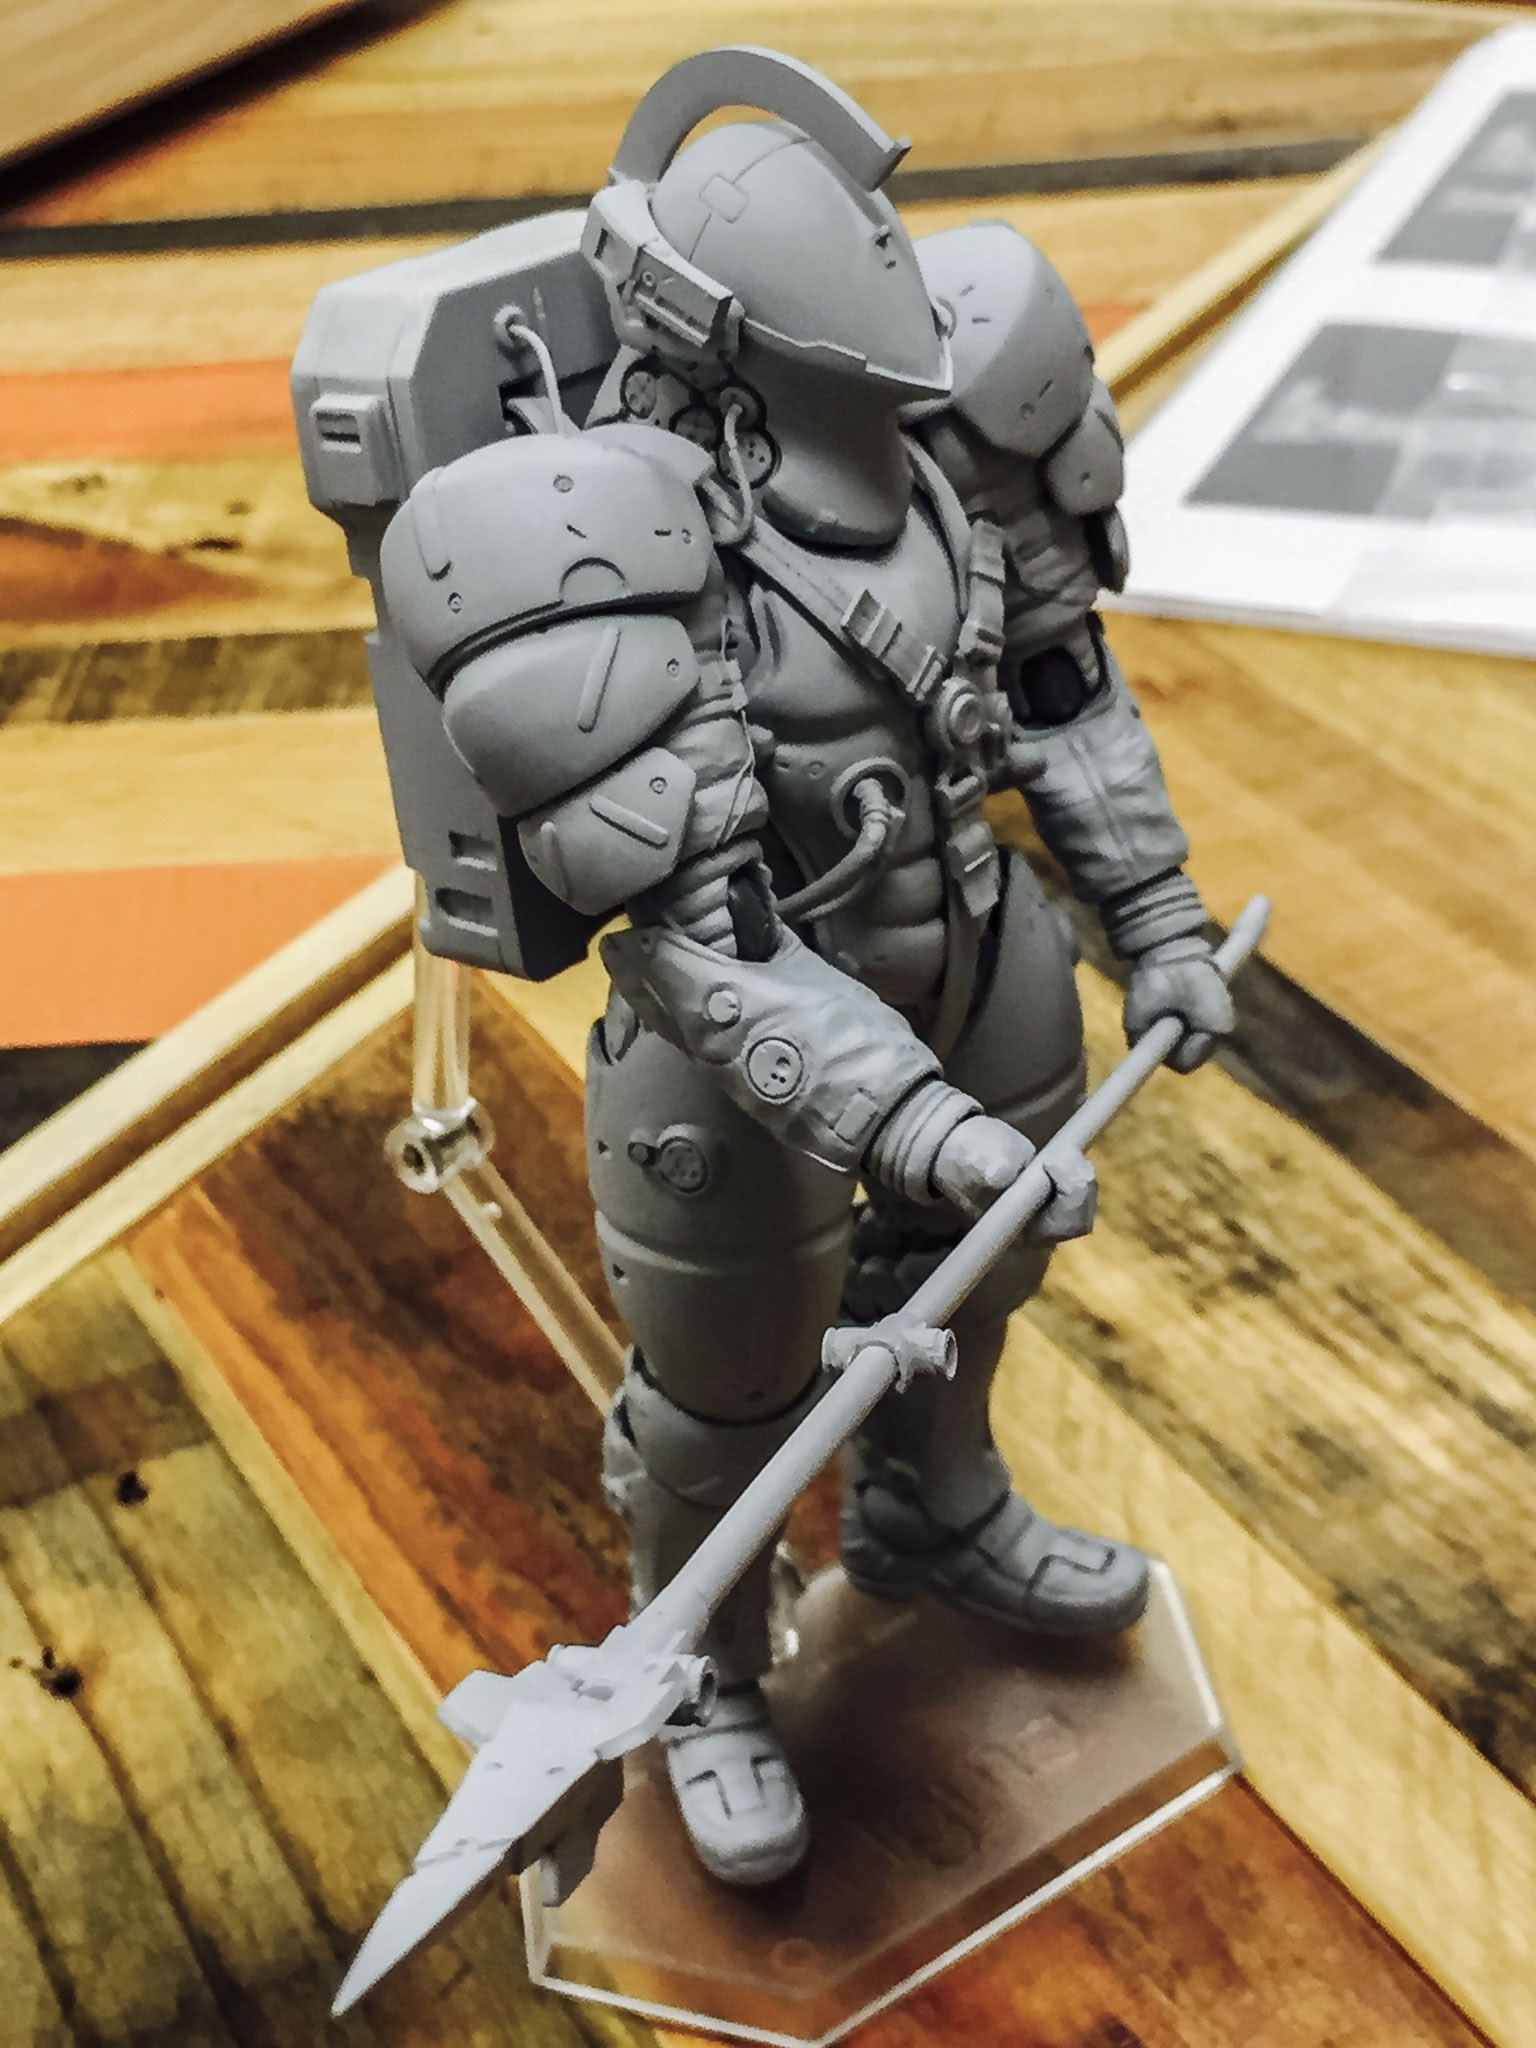 Figurine Figma de Ludens, la mascotte de Kojima Productions – 12 octobre 2016